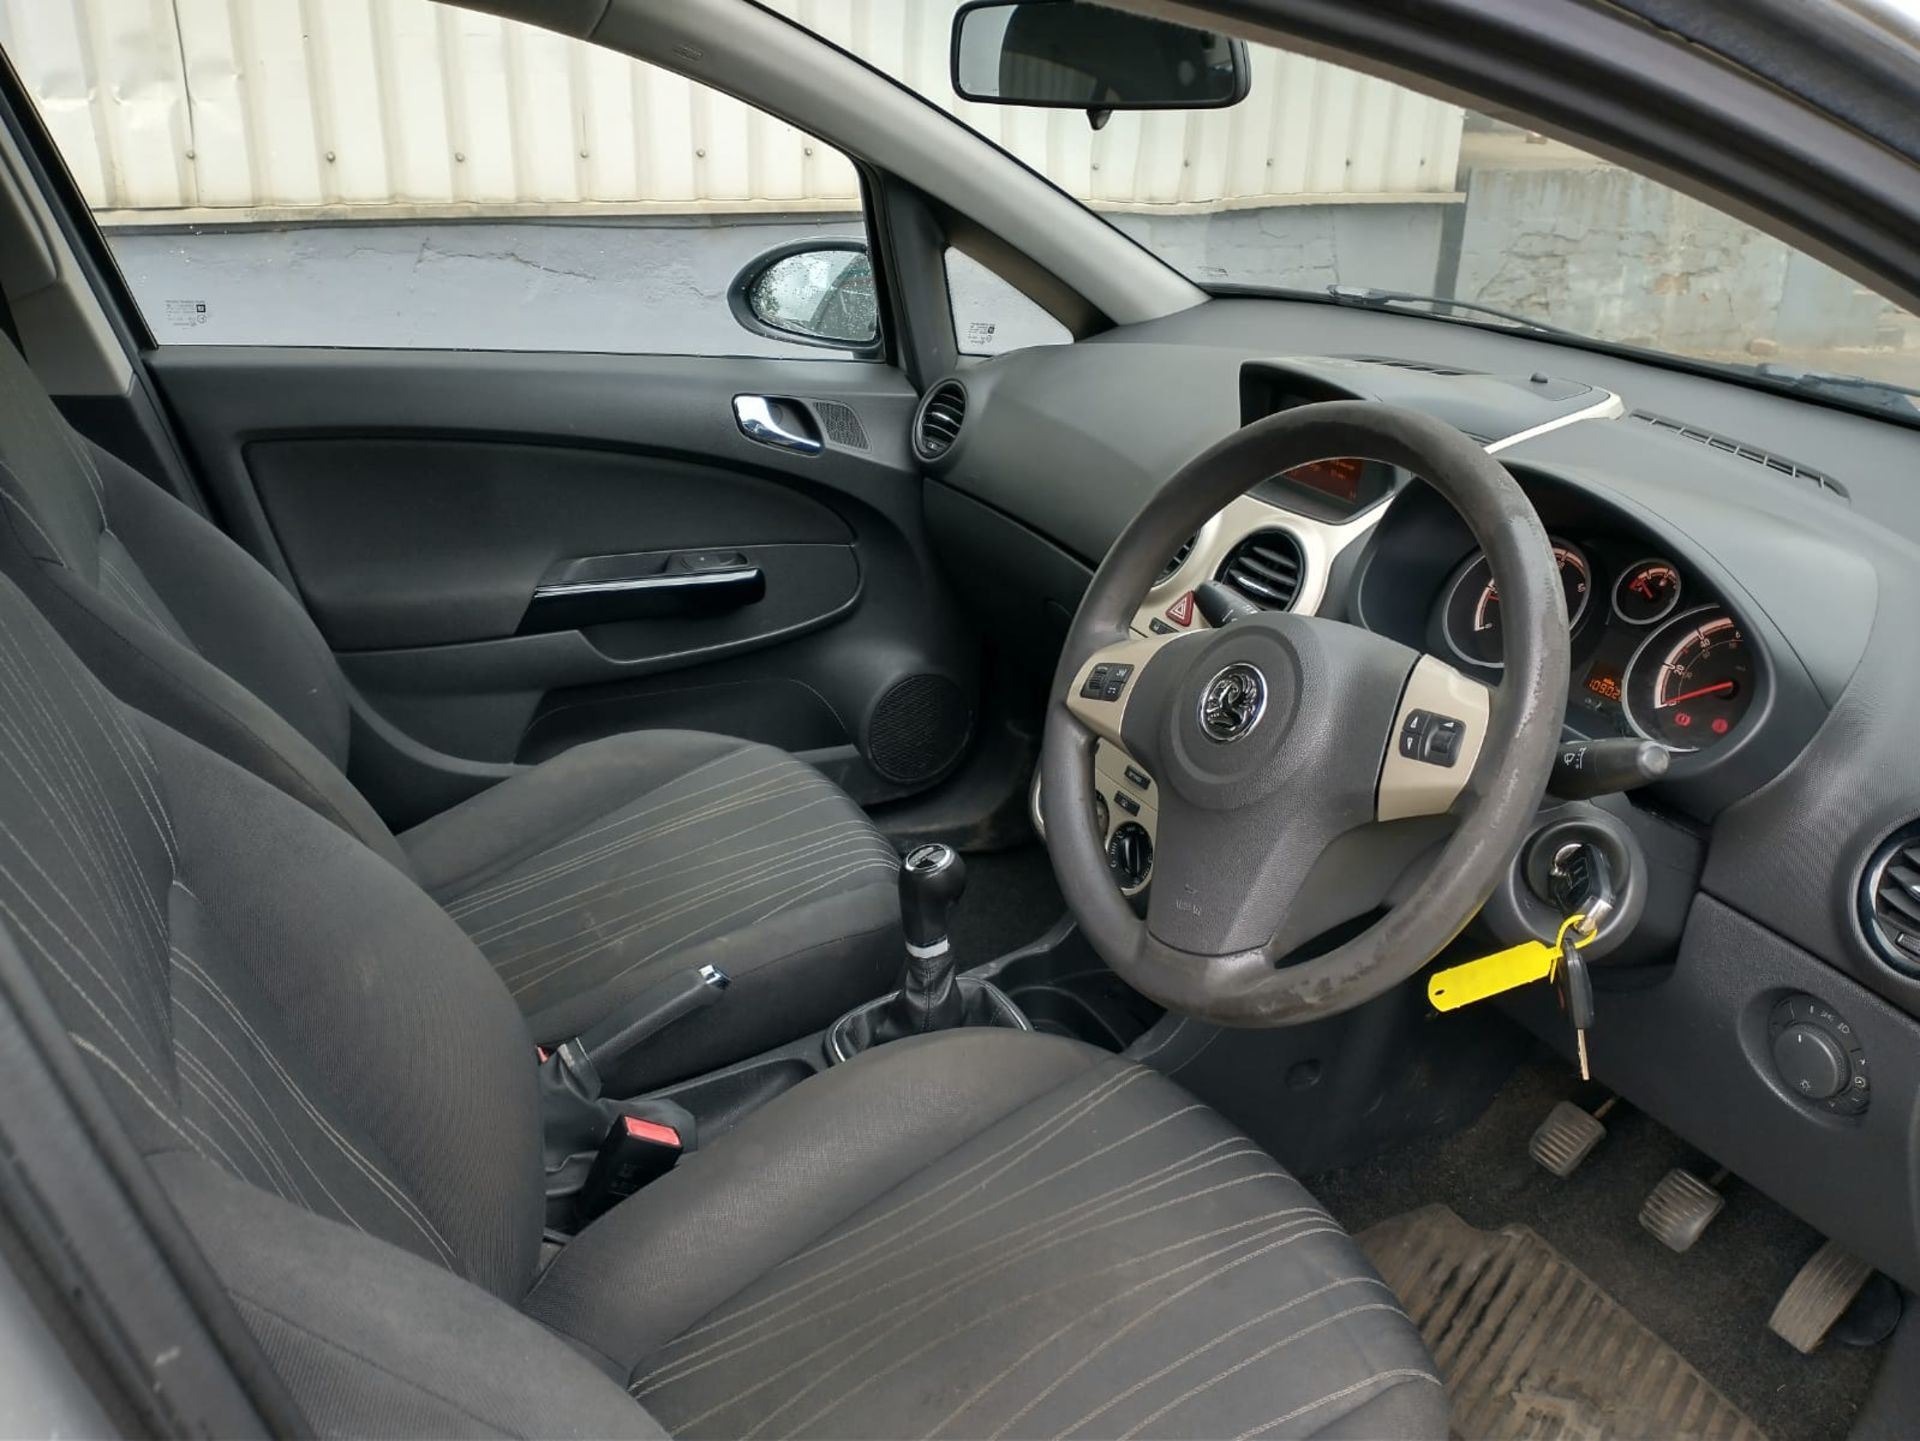 2008 Vauxhall Corsa 1.2 CDTI Club A/C 5Dr hatchback - Image 10 of 15